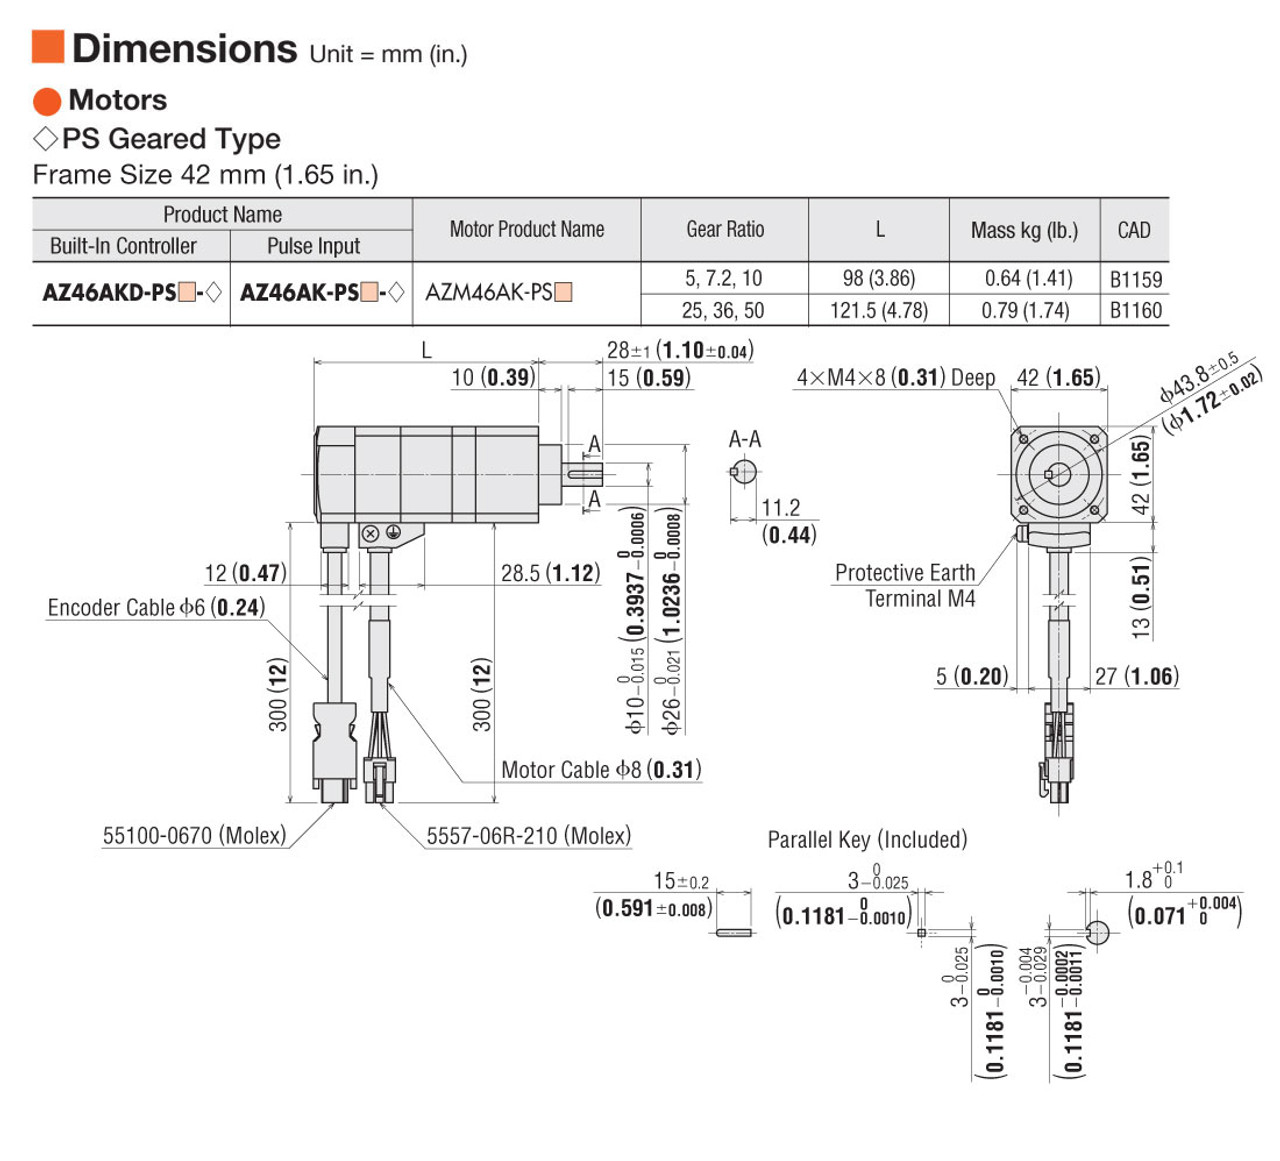 AZ46AKD-PS25-3 - Dimensions